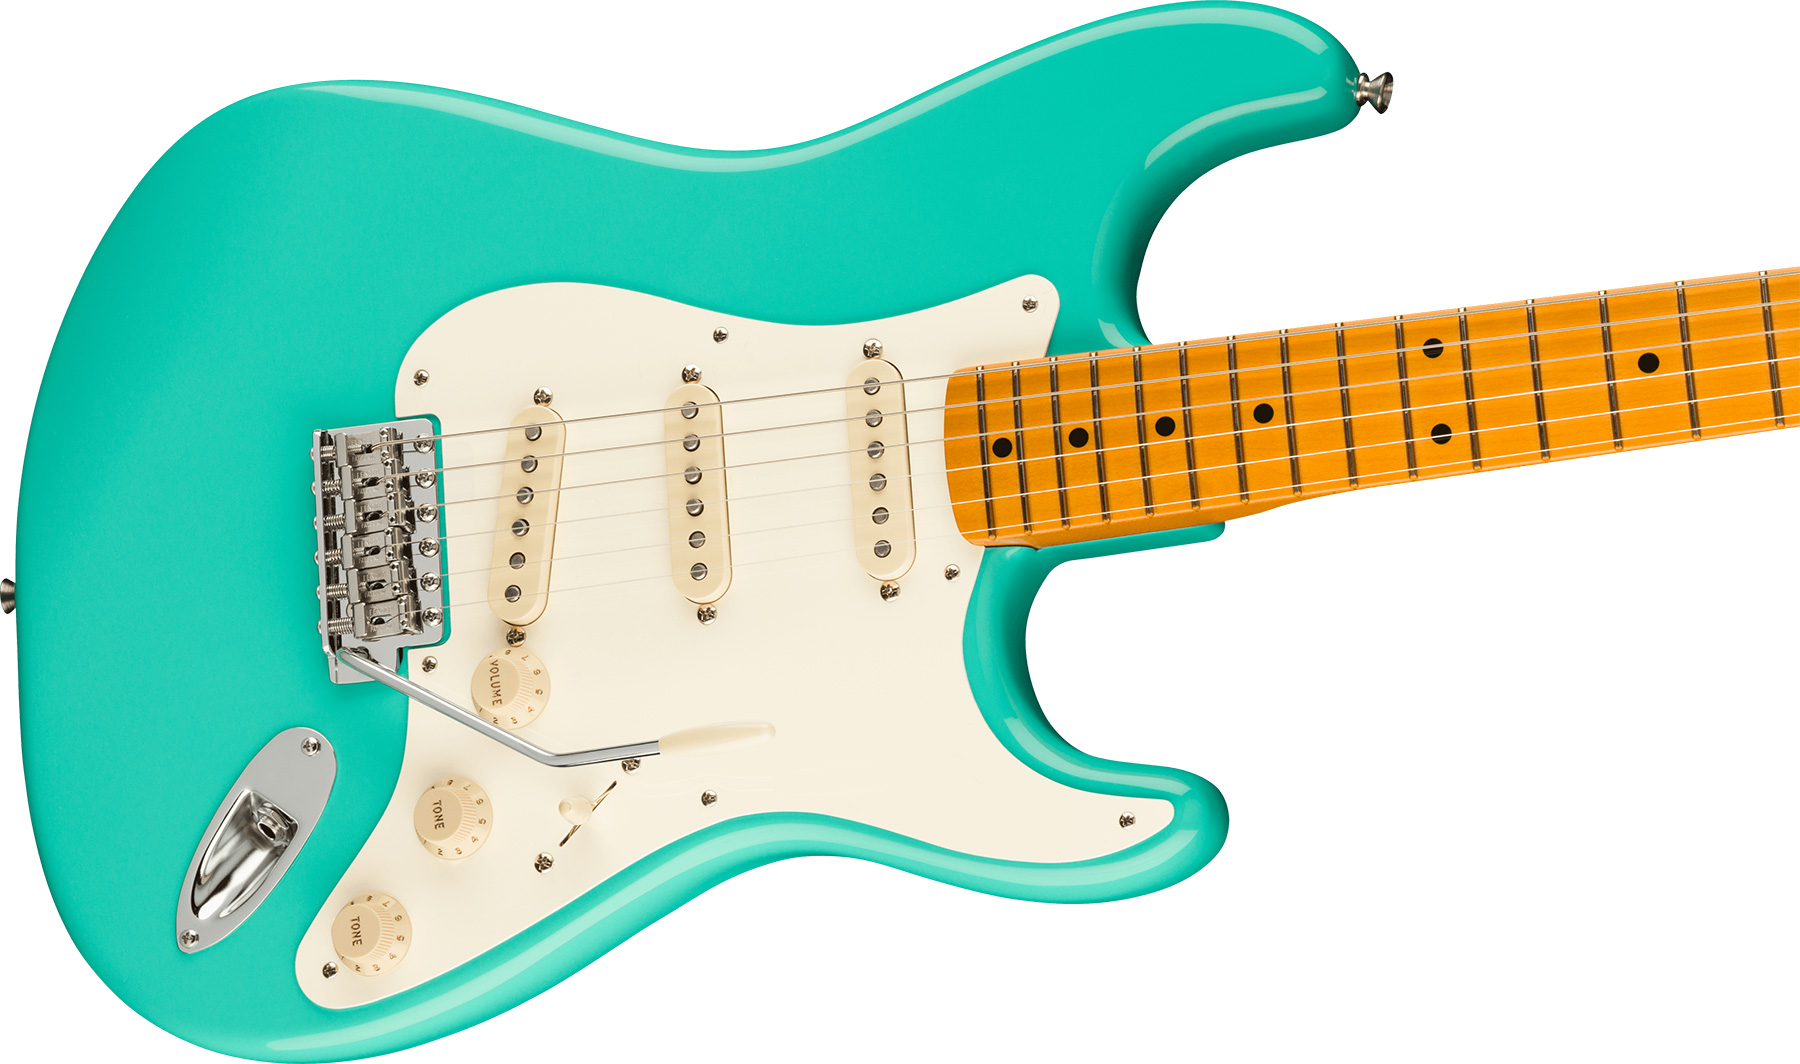 Fender Strat 1957 American Vintage Ii Usa 3s Trem Mn - Sea Foam Green - E-Gitarre in Str-Form - Variation 2